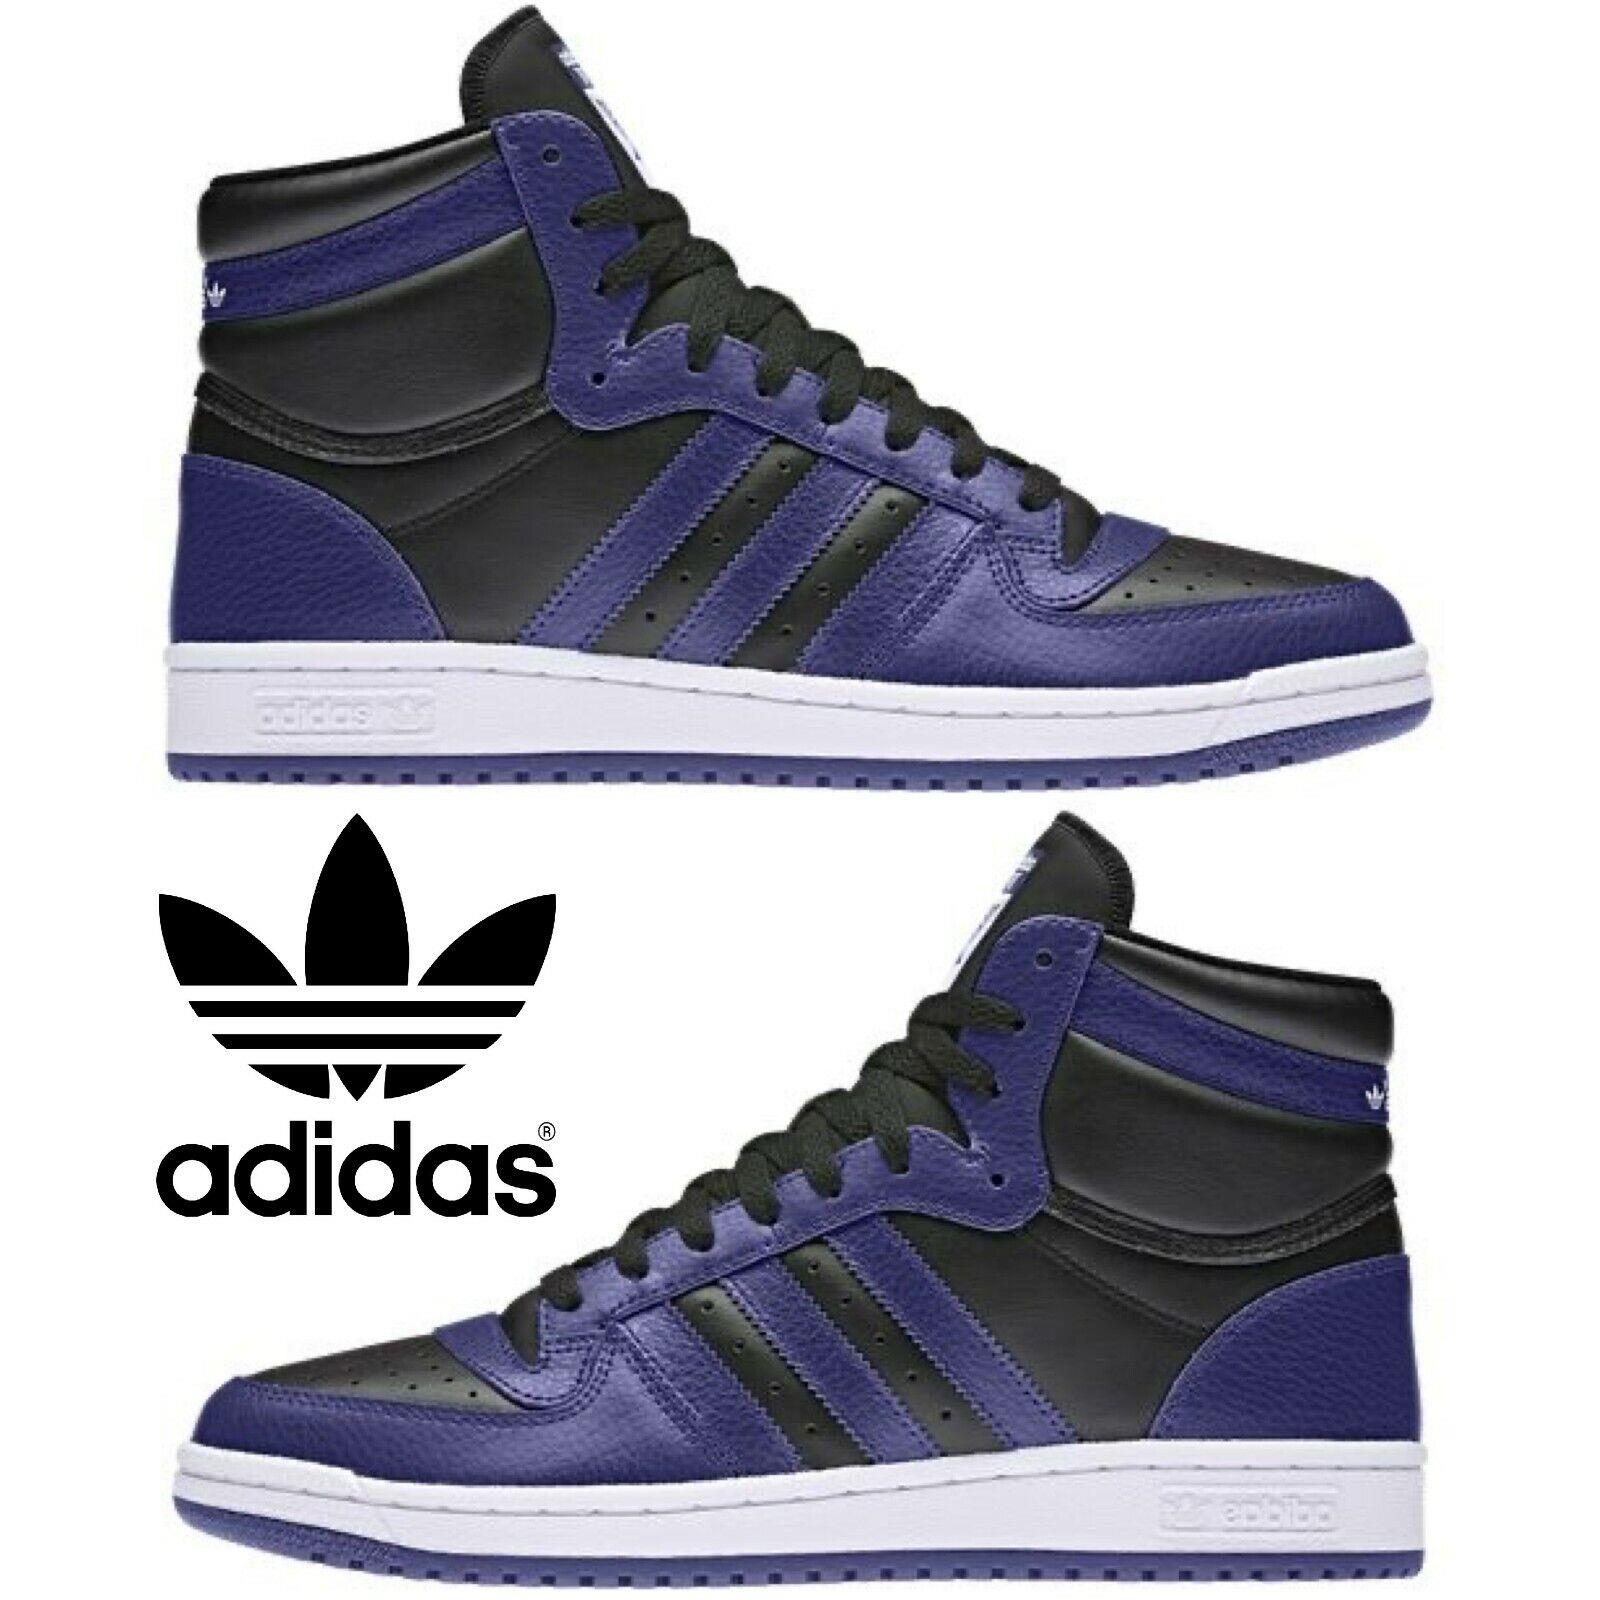 Adidas Originals Top Ten Hi Men`s Sneakers Comfort Casual Shoes Black Royal Blue - Black , Black/Royal Manufacturer